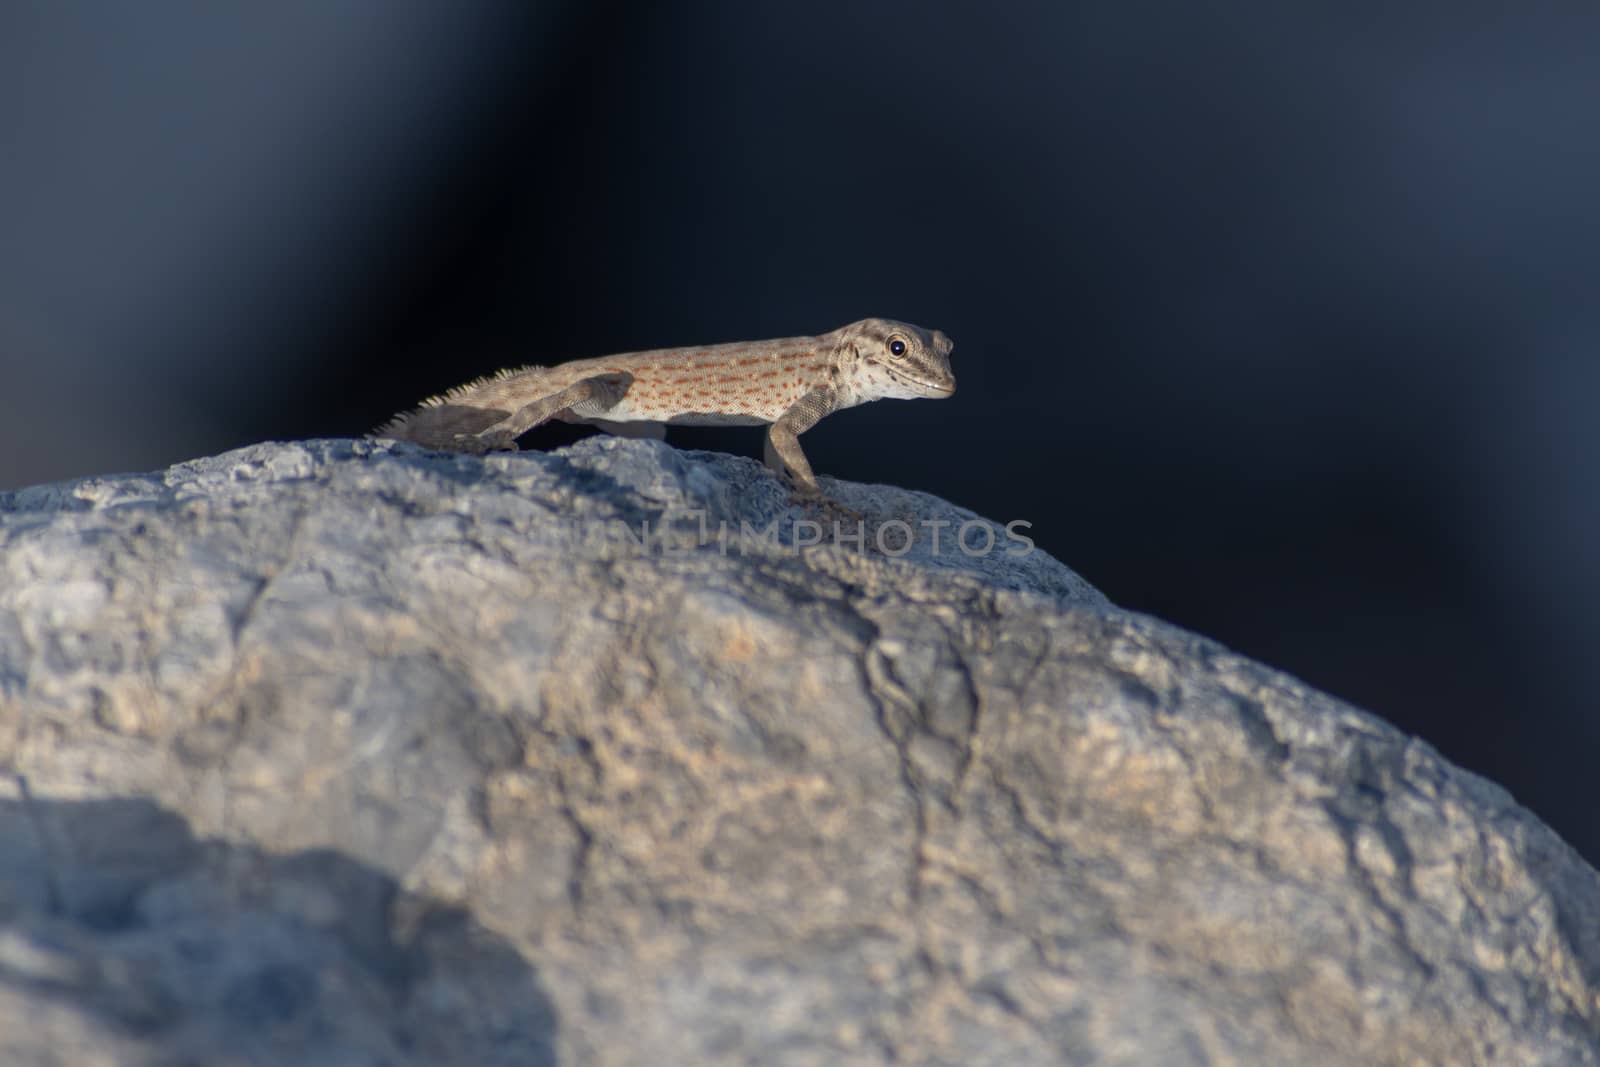 A Rock Semaphore Gecko (Pristurus rupestris) in the evening sun  by kingmaphotos